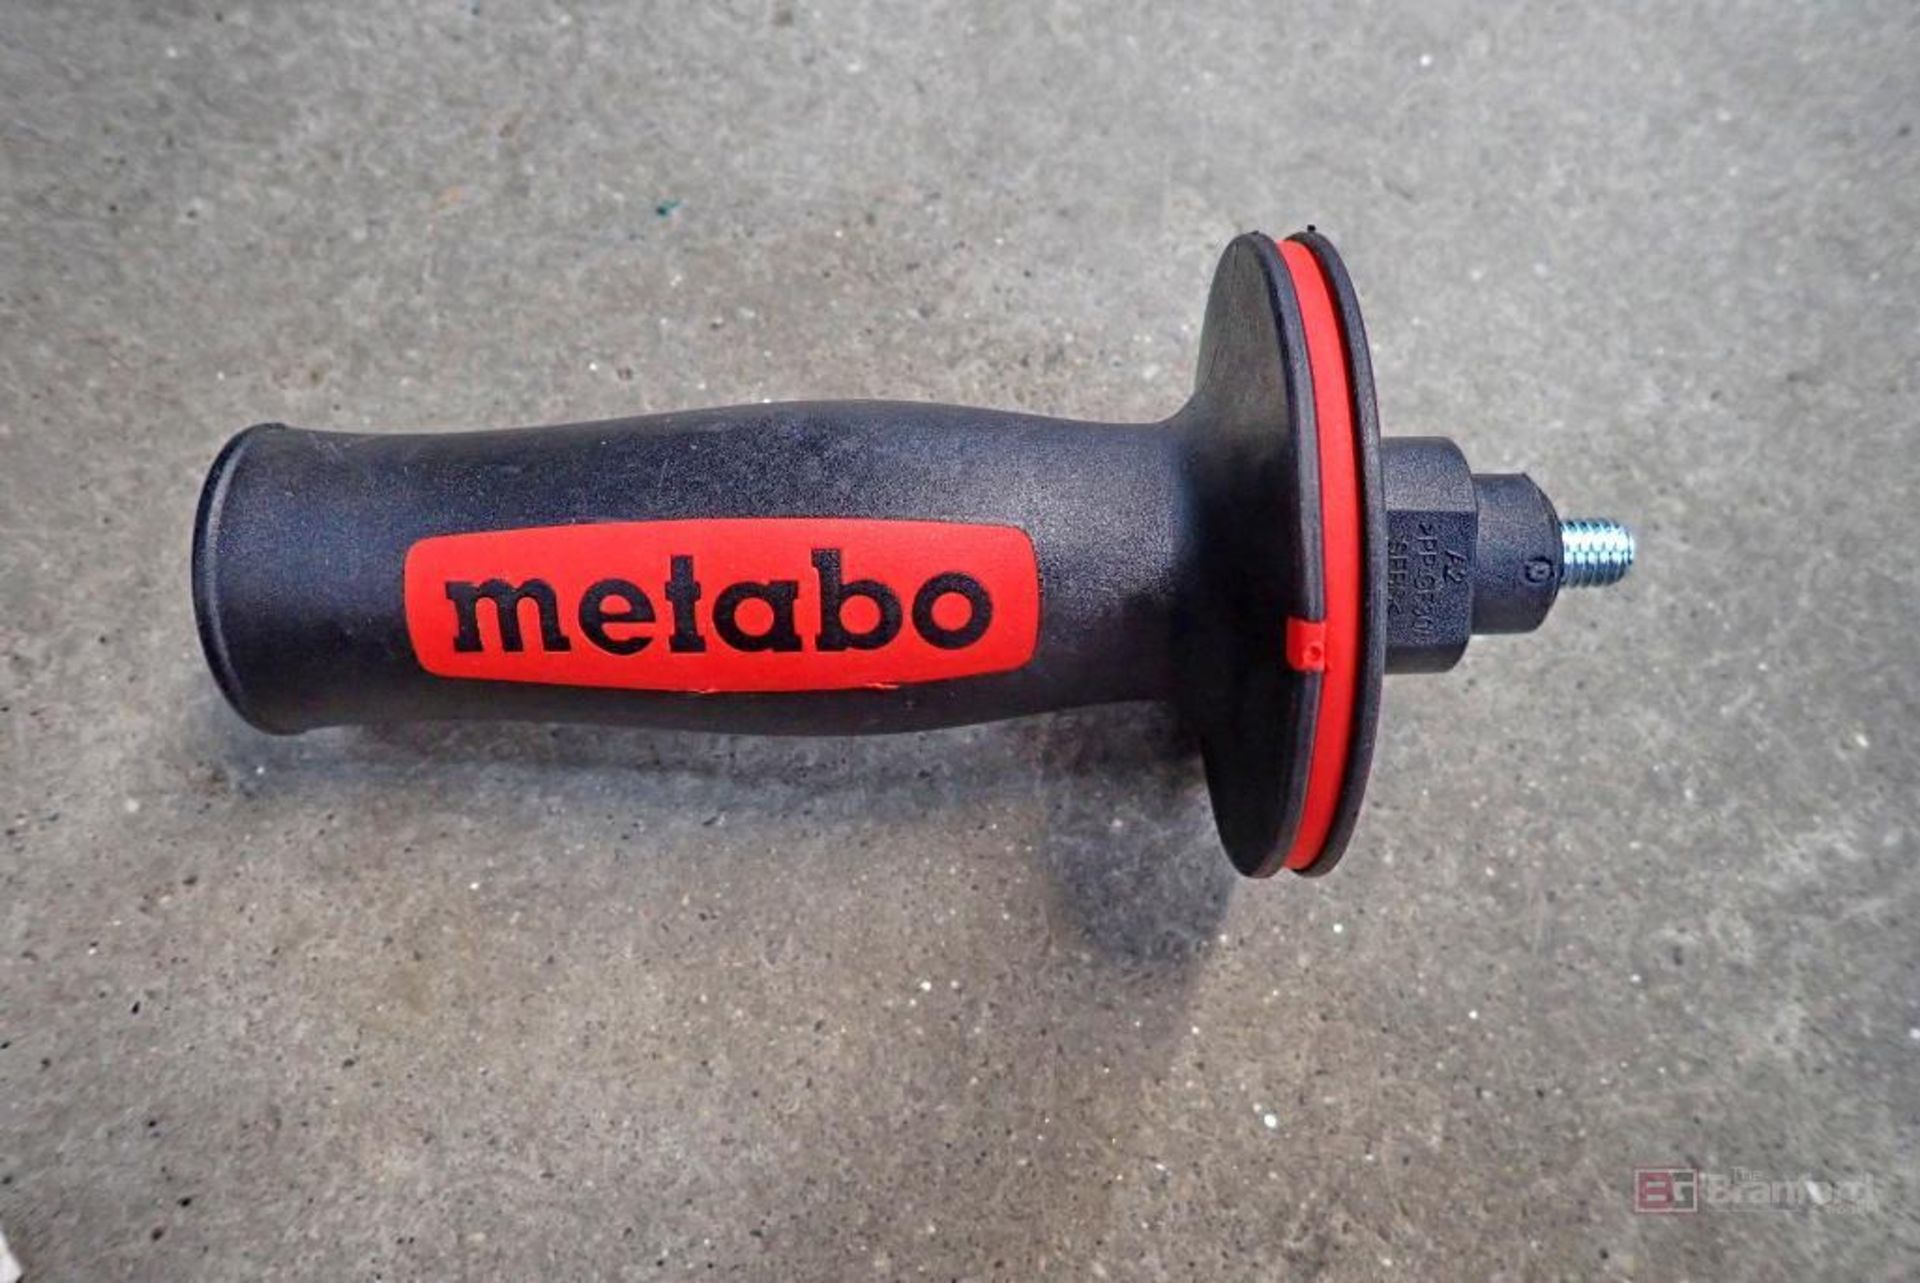 Metabo KFM 15-10 F (601752620) Metal Beveling Tool - Image 3 of 4